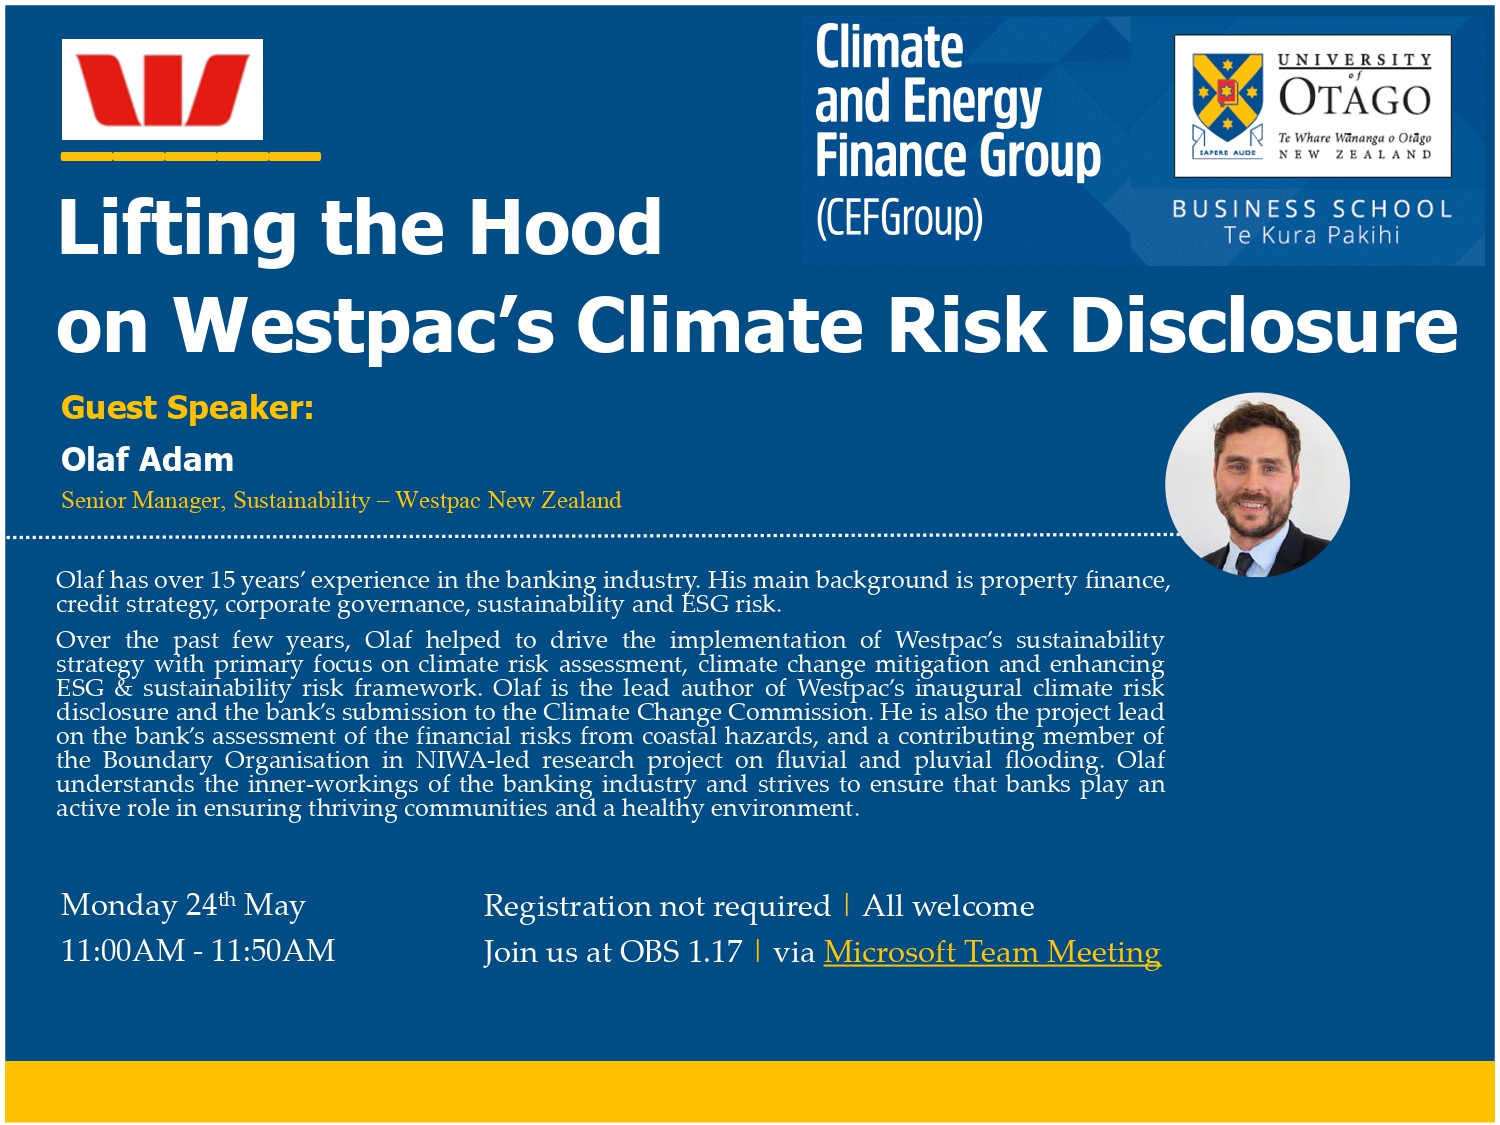 CEFGroup Webinar | Lifting the Hood on Westpac’s Climate Risk Disclosure @ Otago Business School Seminar Room 1.17